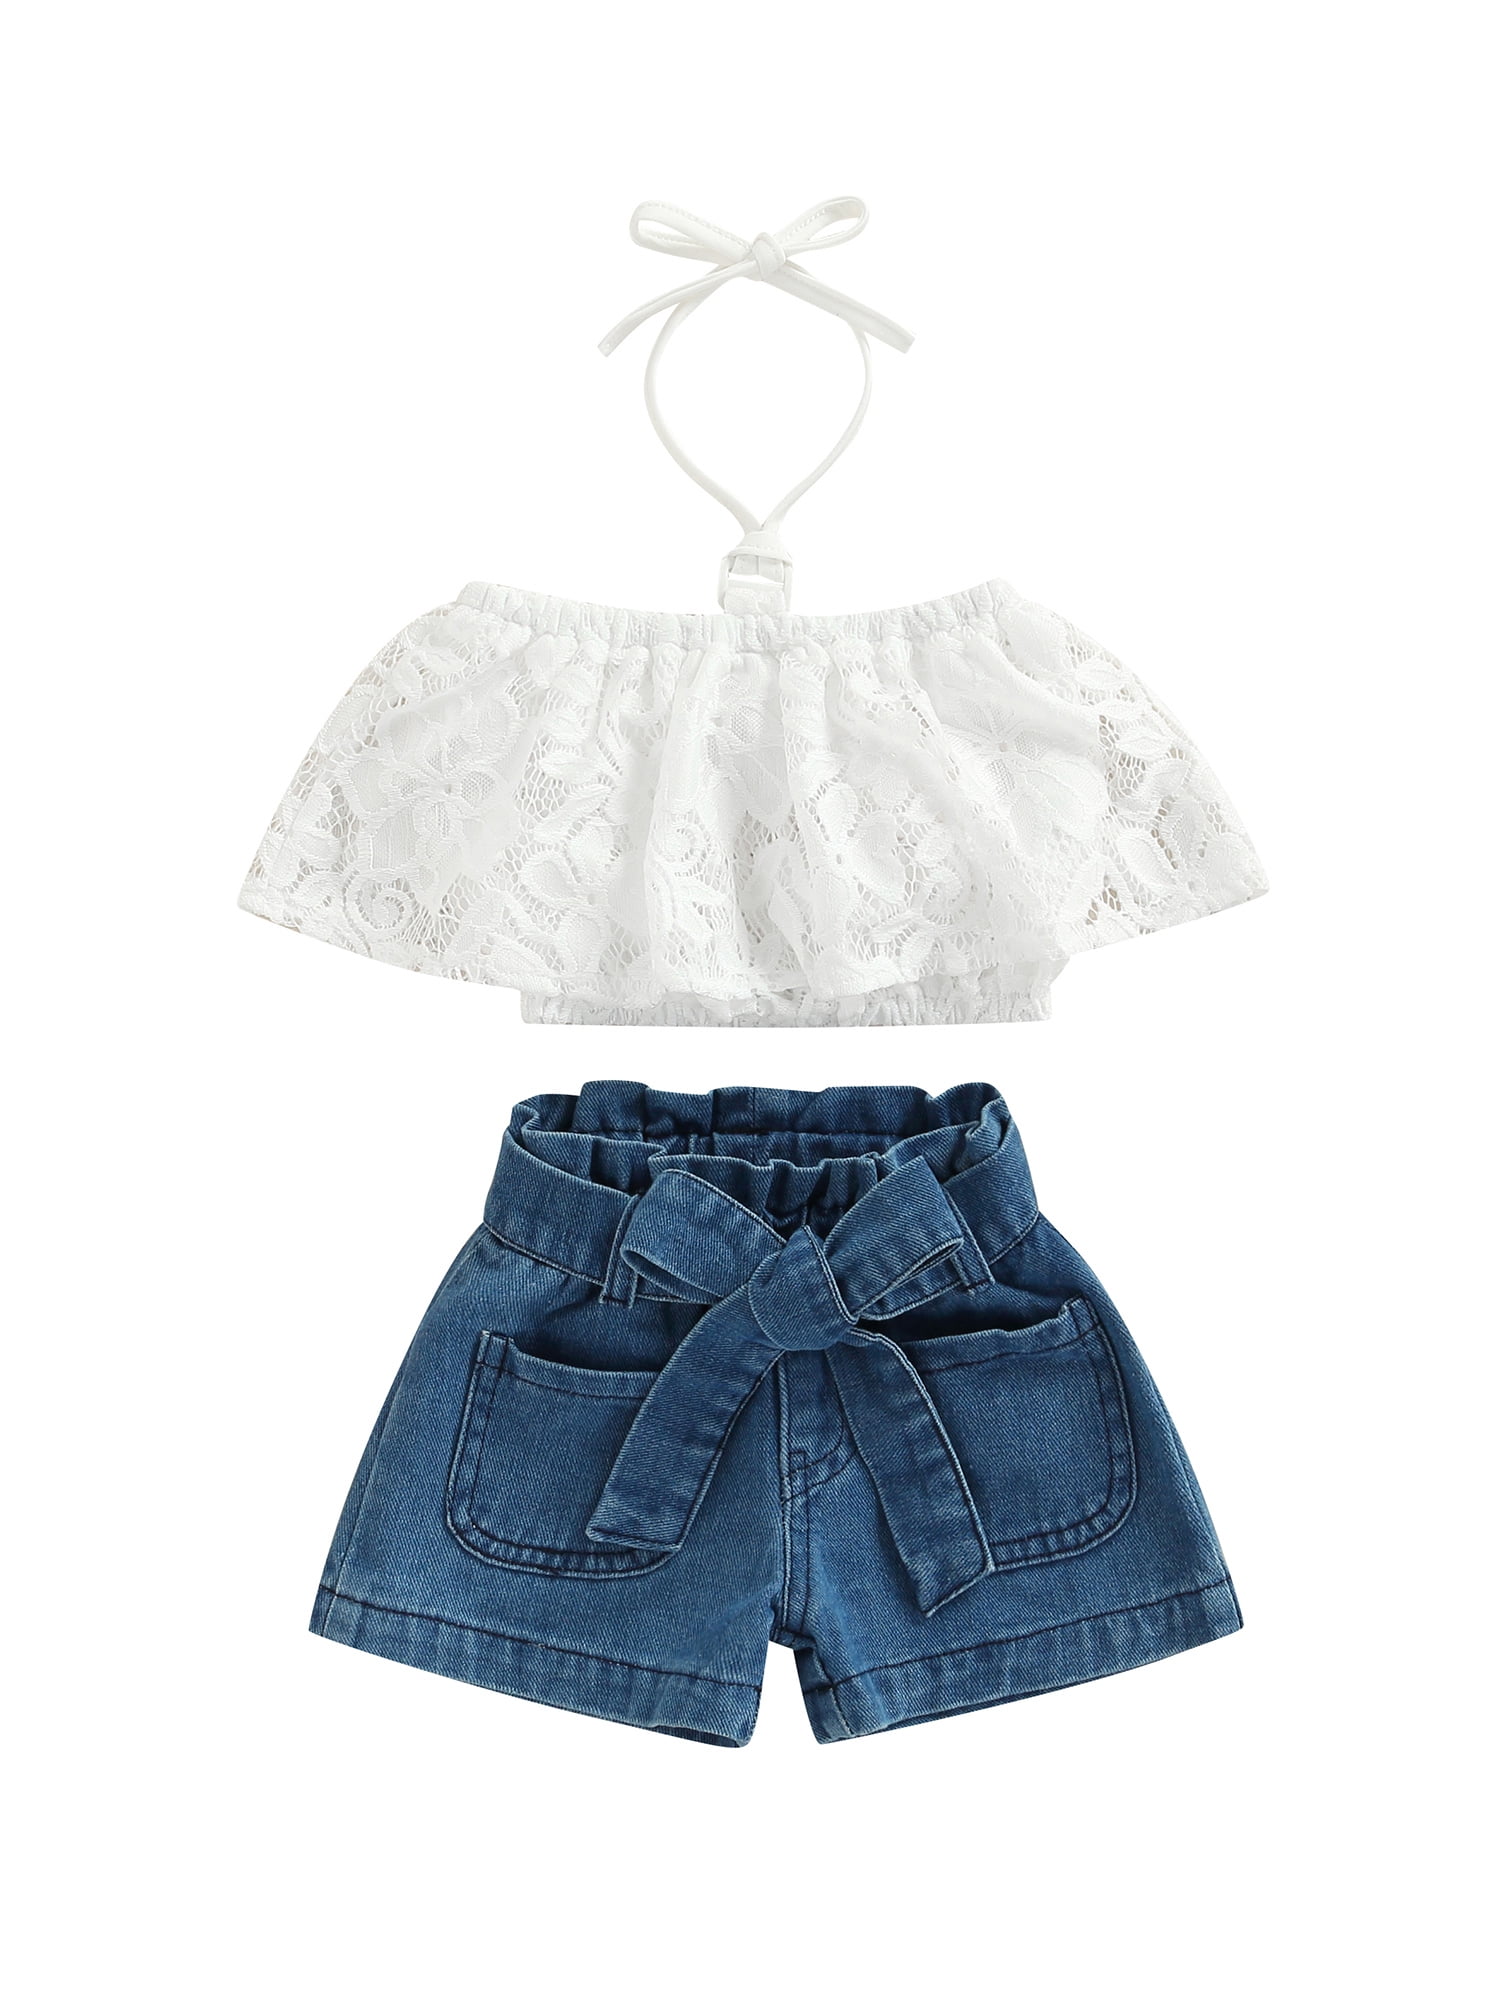 Drivkraft pensum eksil wybzd Toddler Baby Girl Summer Outfits Off Shoulder Halter Lace Crochet Crop  Top Denim Shorts Clothes Sets,Blue - Walmart.com